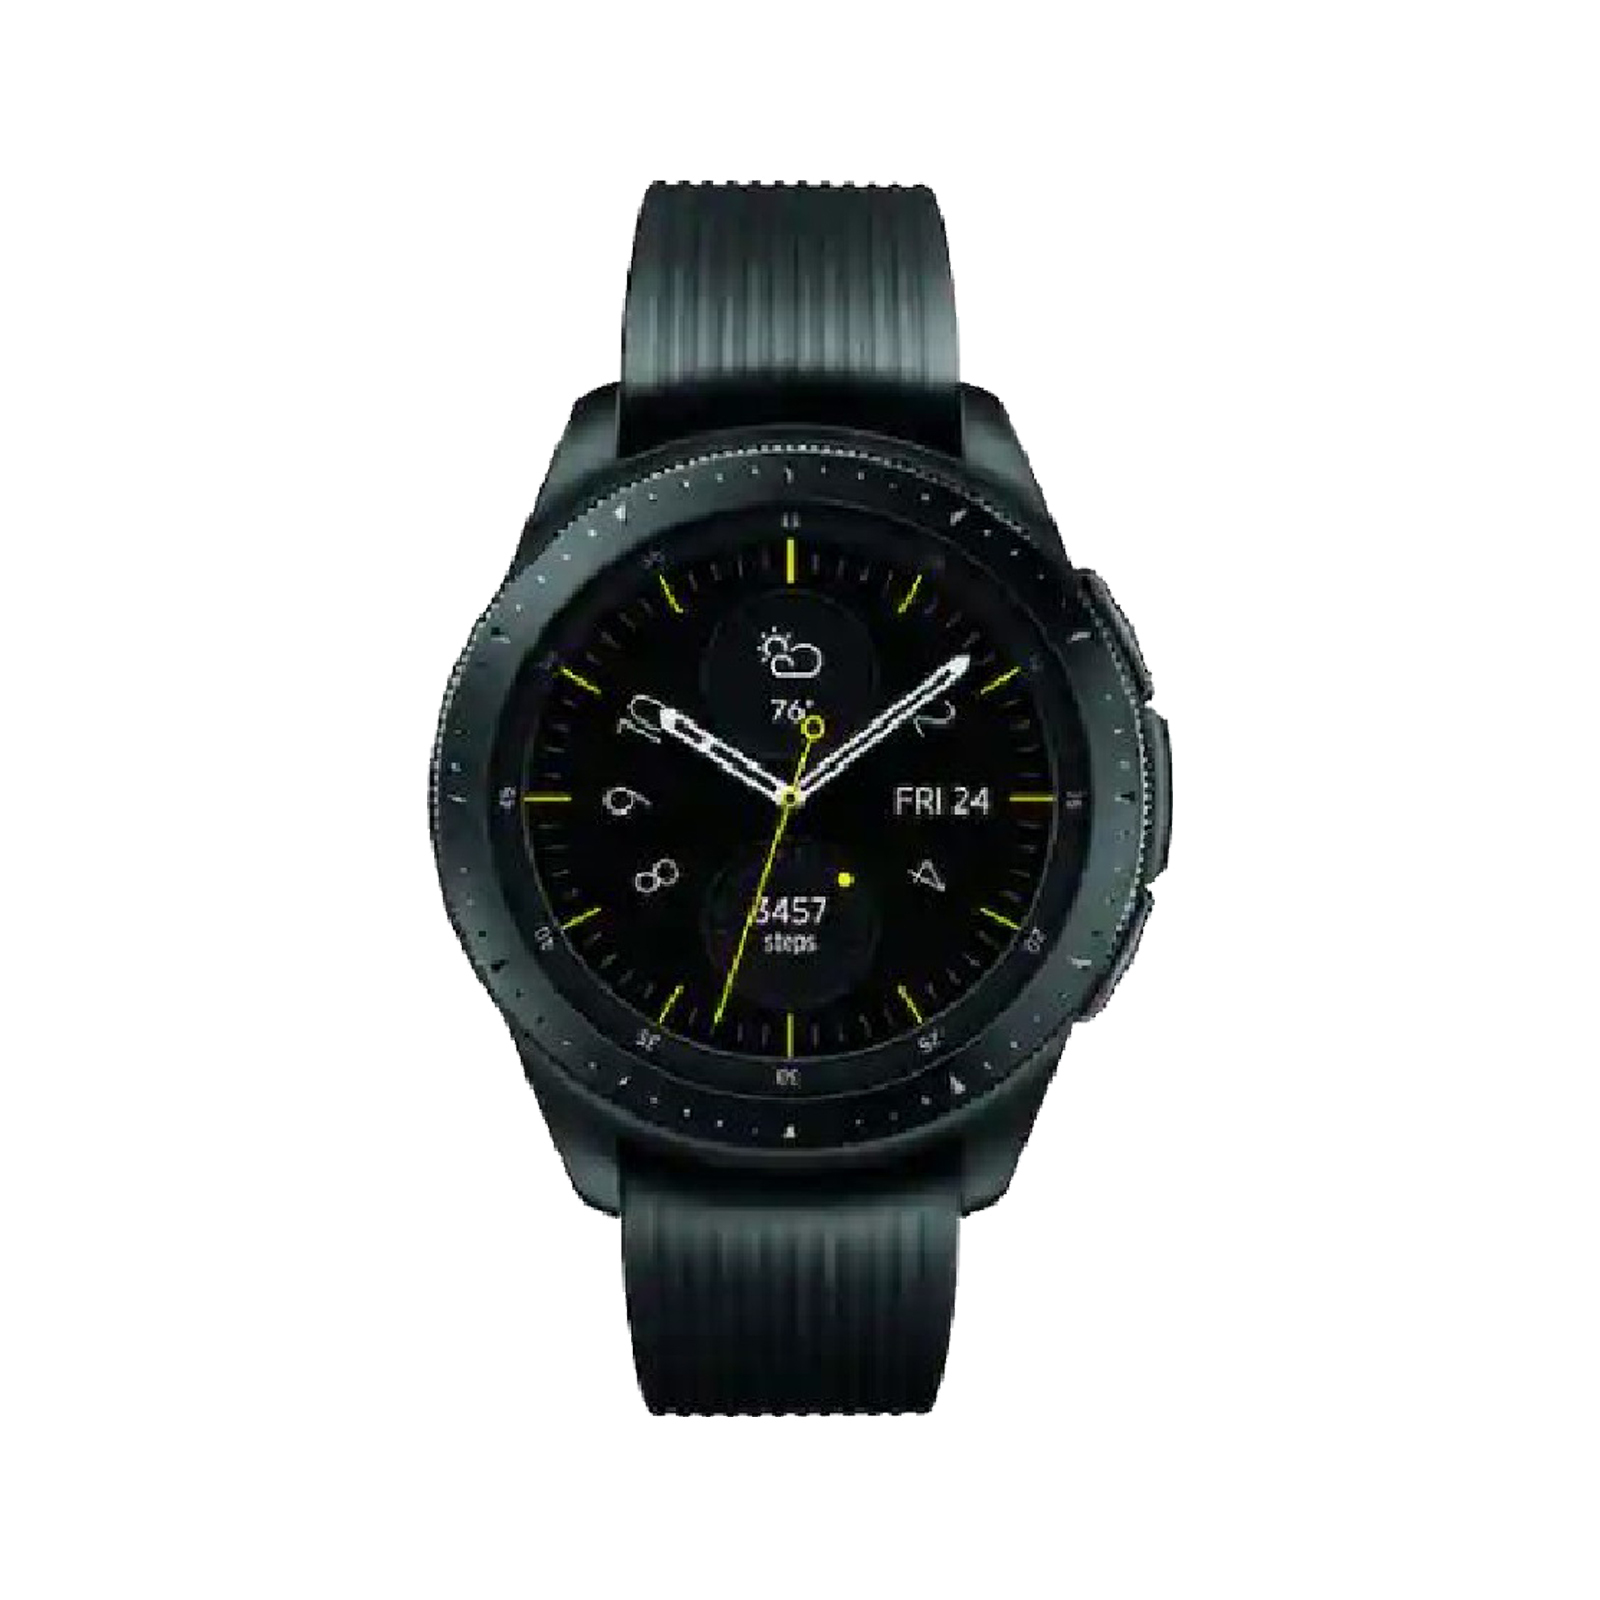 Samsung Galaxy Watch [LTE] [42mm] [Black] [As New]